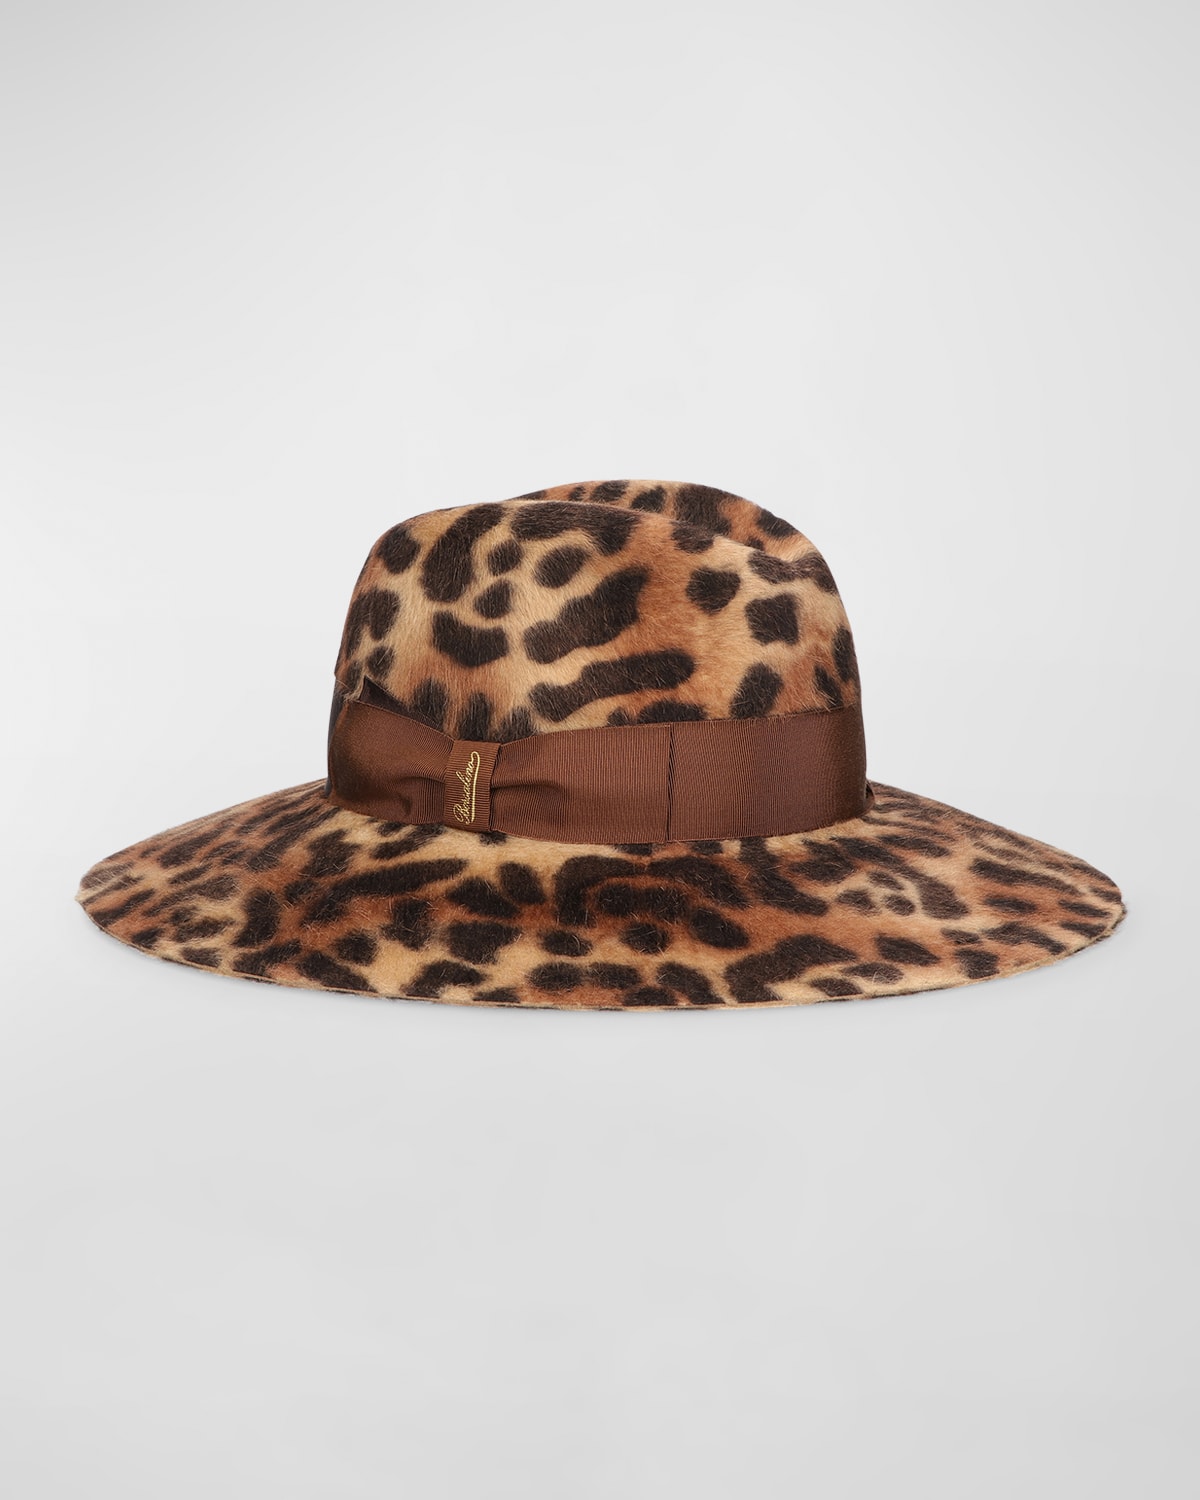 Borsalino Sophie Leopard Print Felt Hat